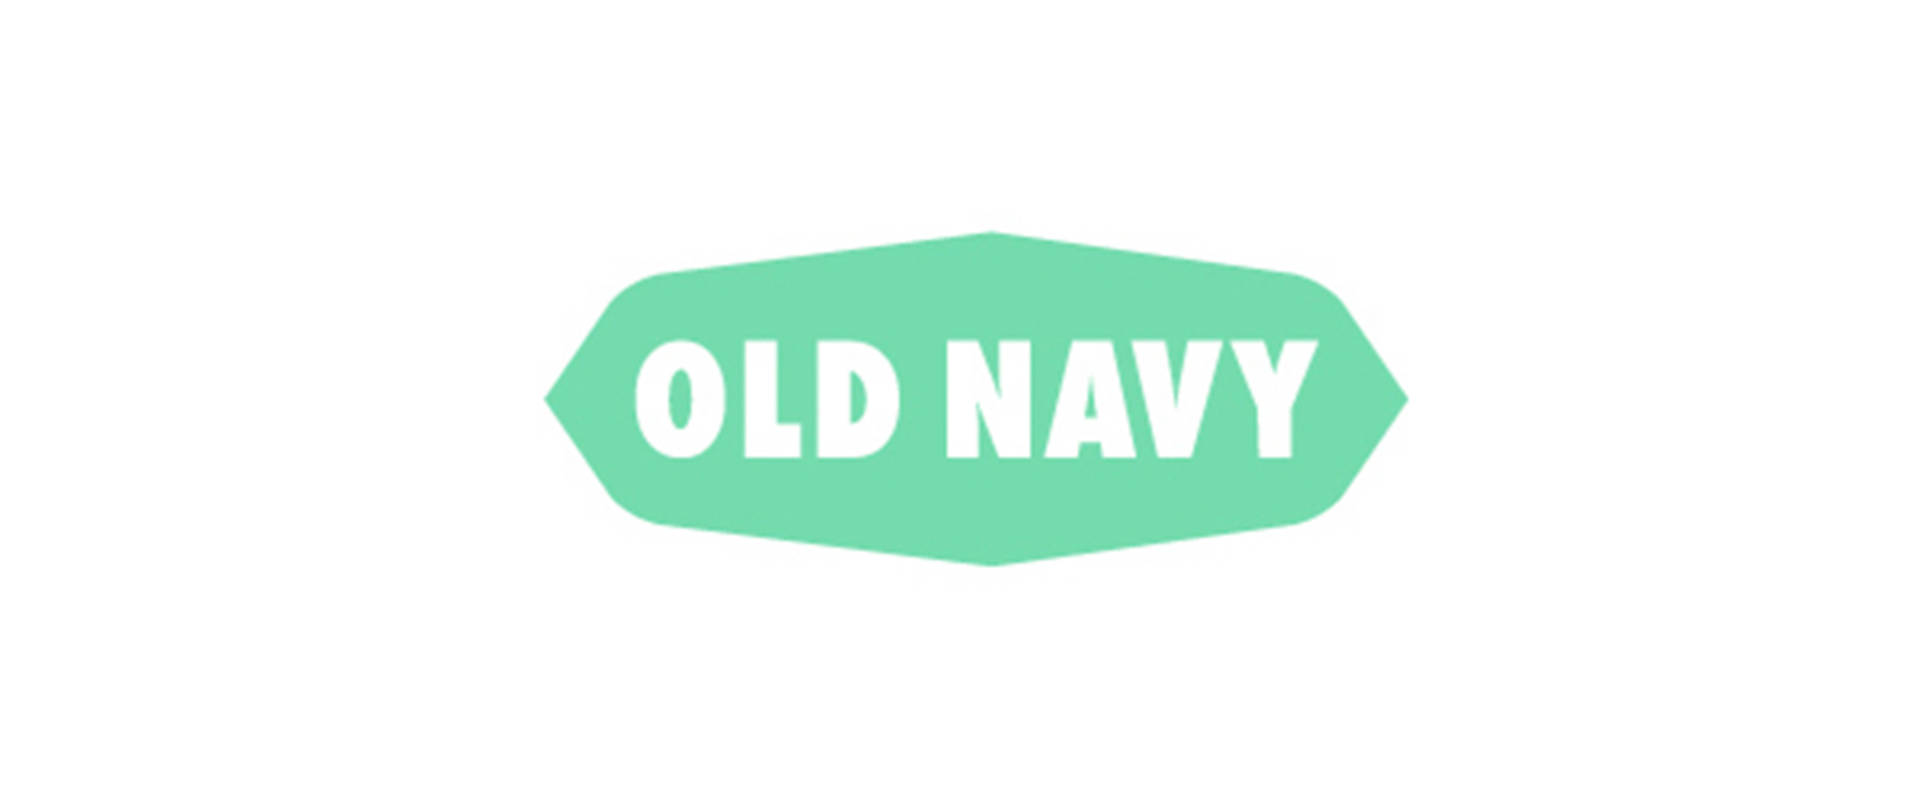 Old Navy Green Logo Design